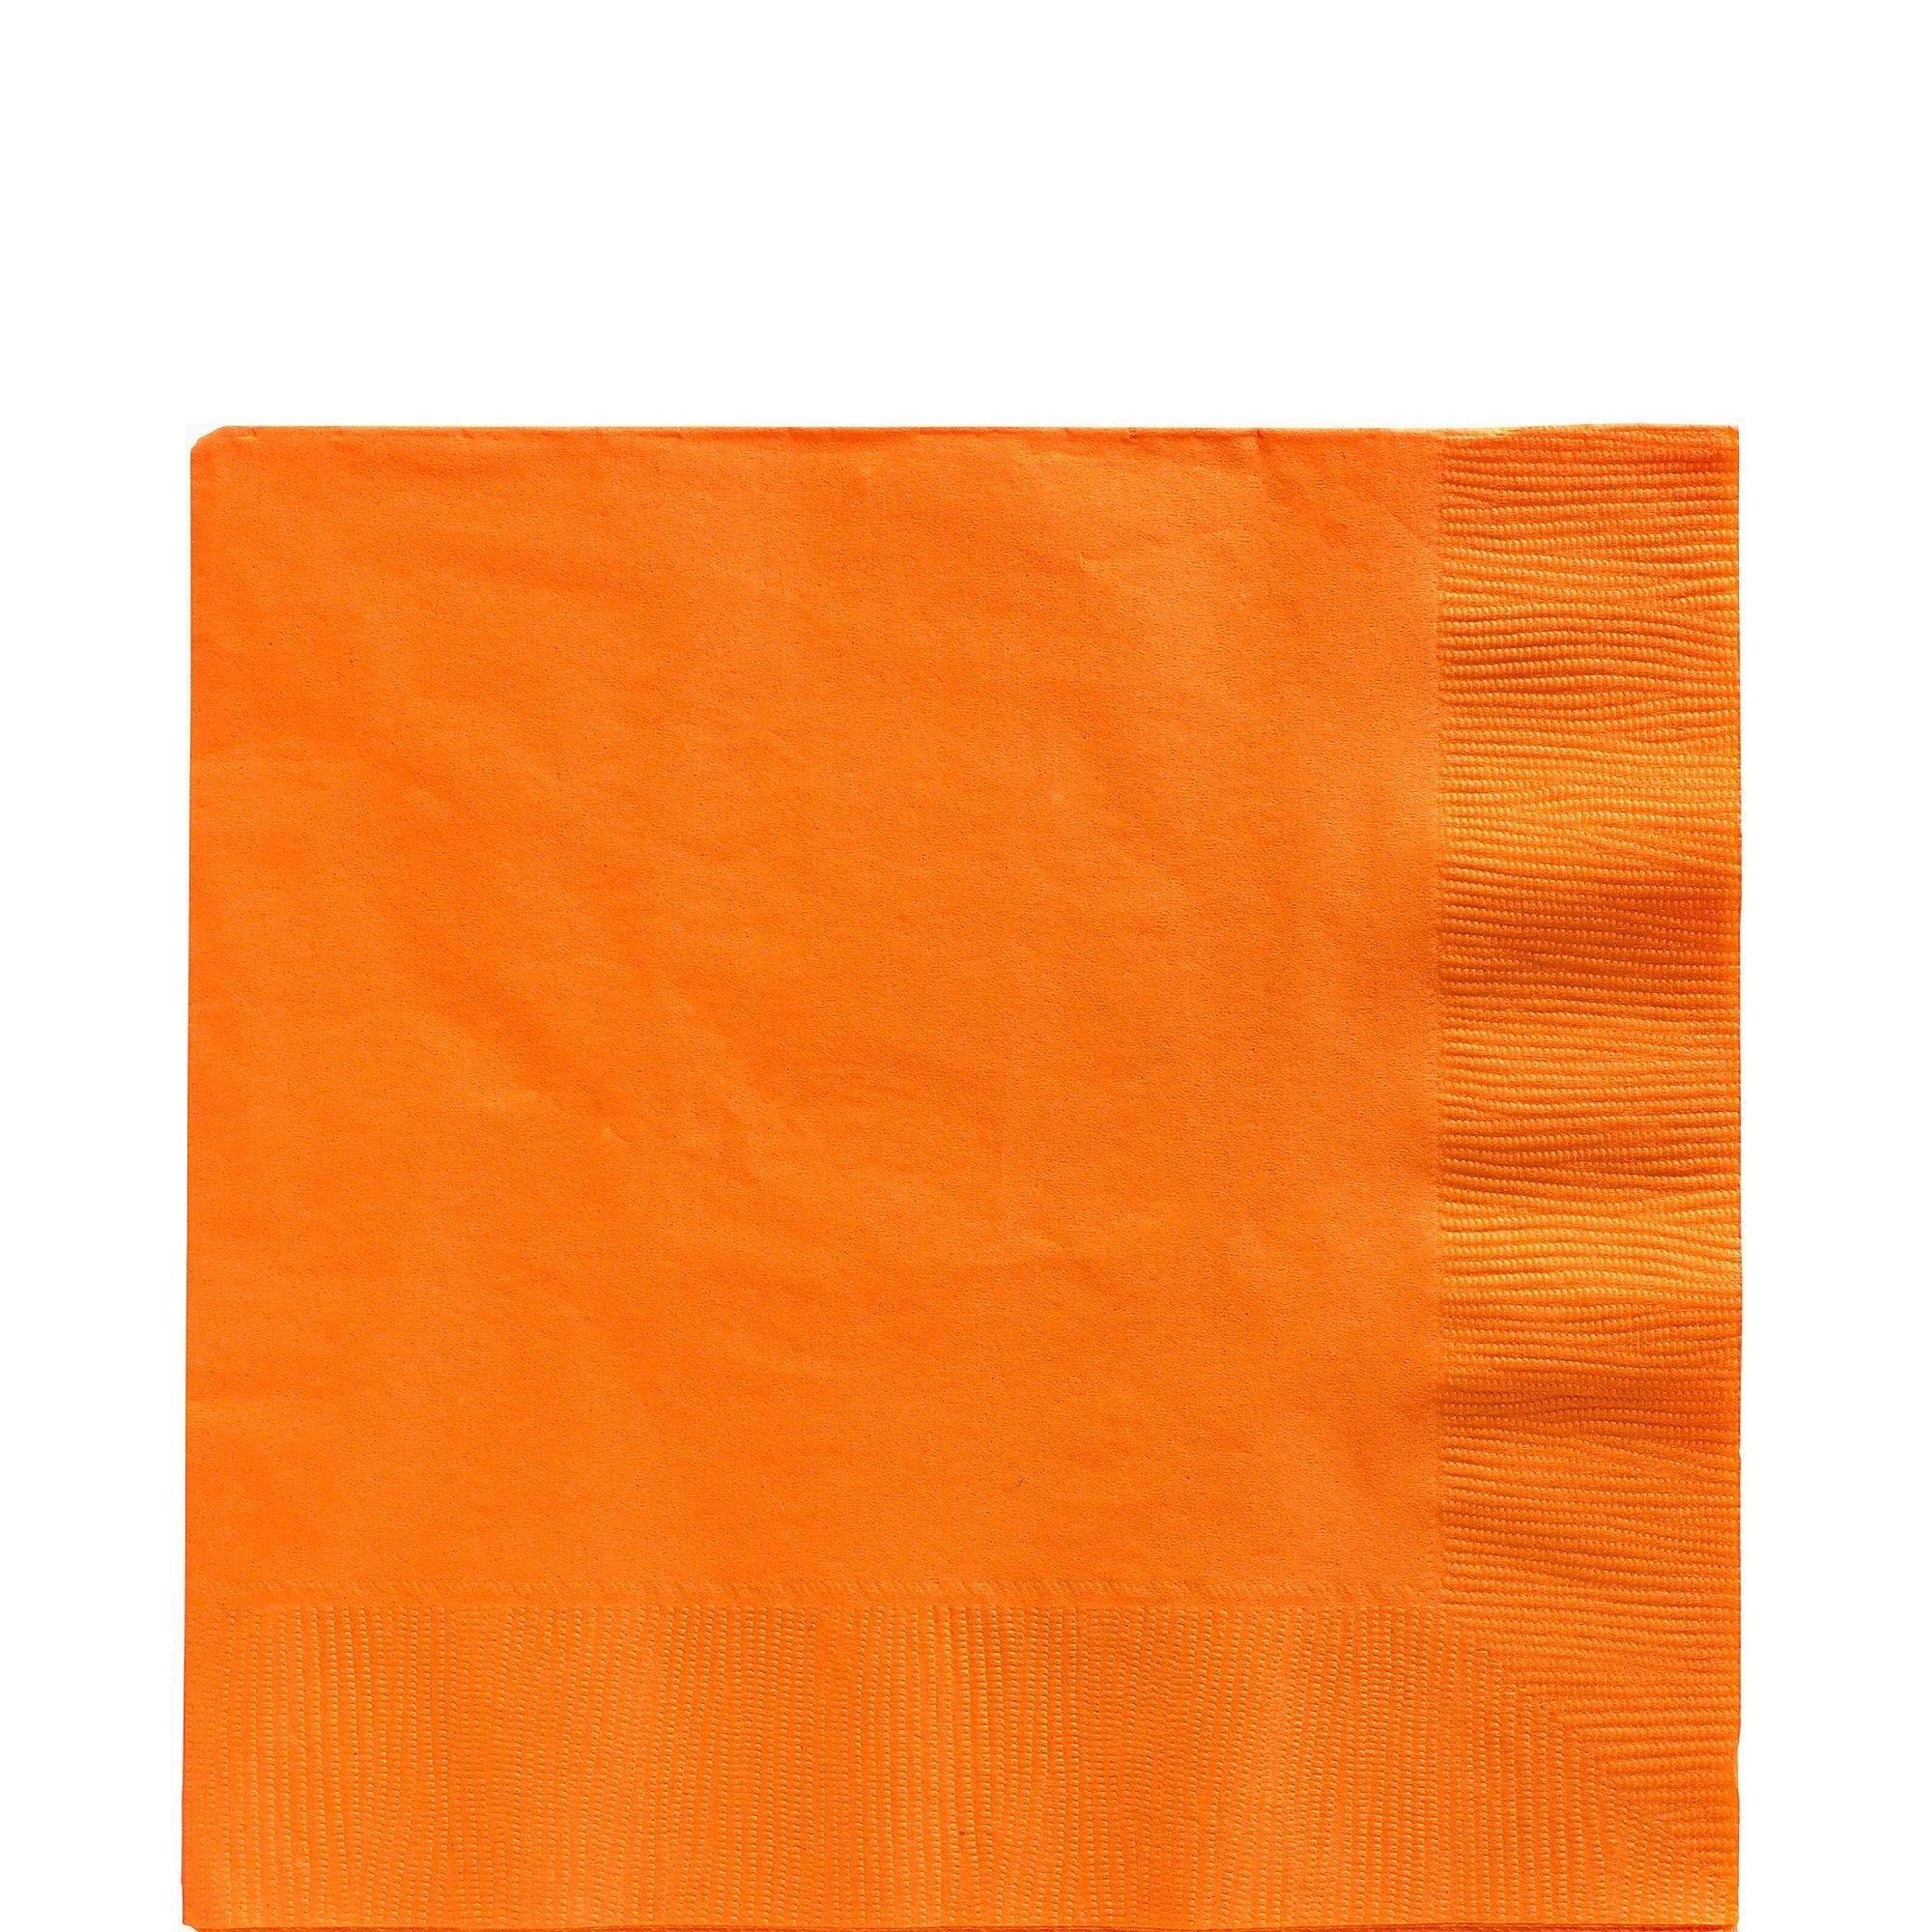 Orange Tableware Kit for 20 Guests